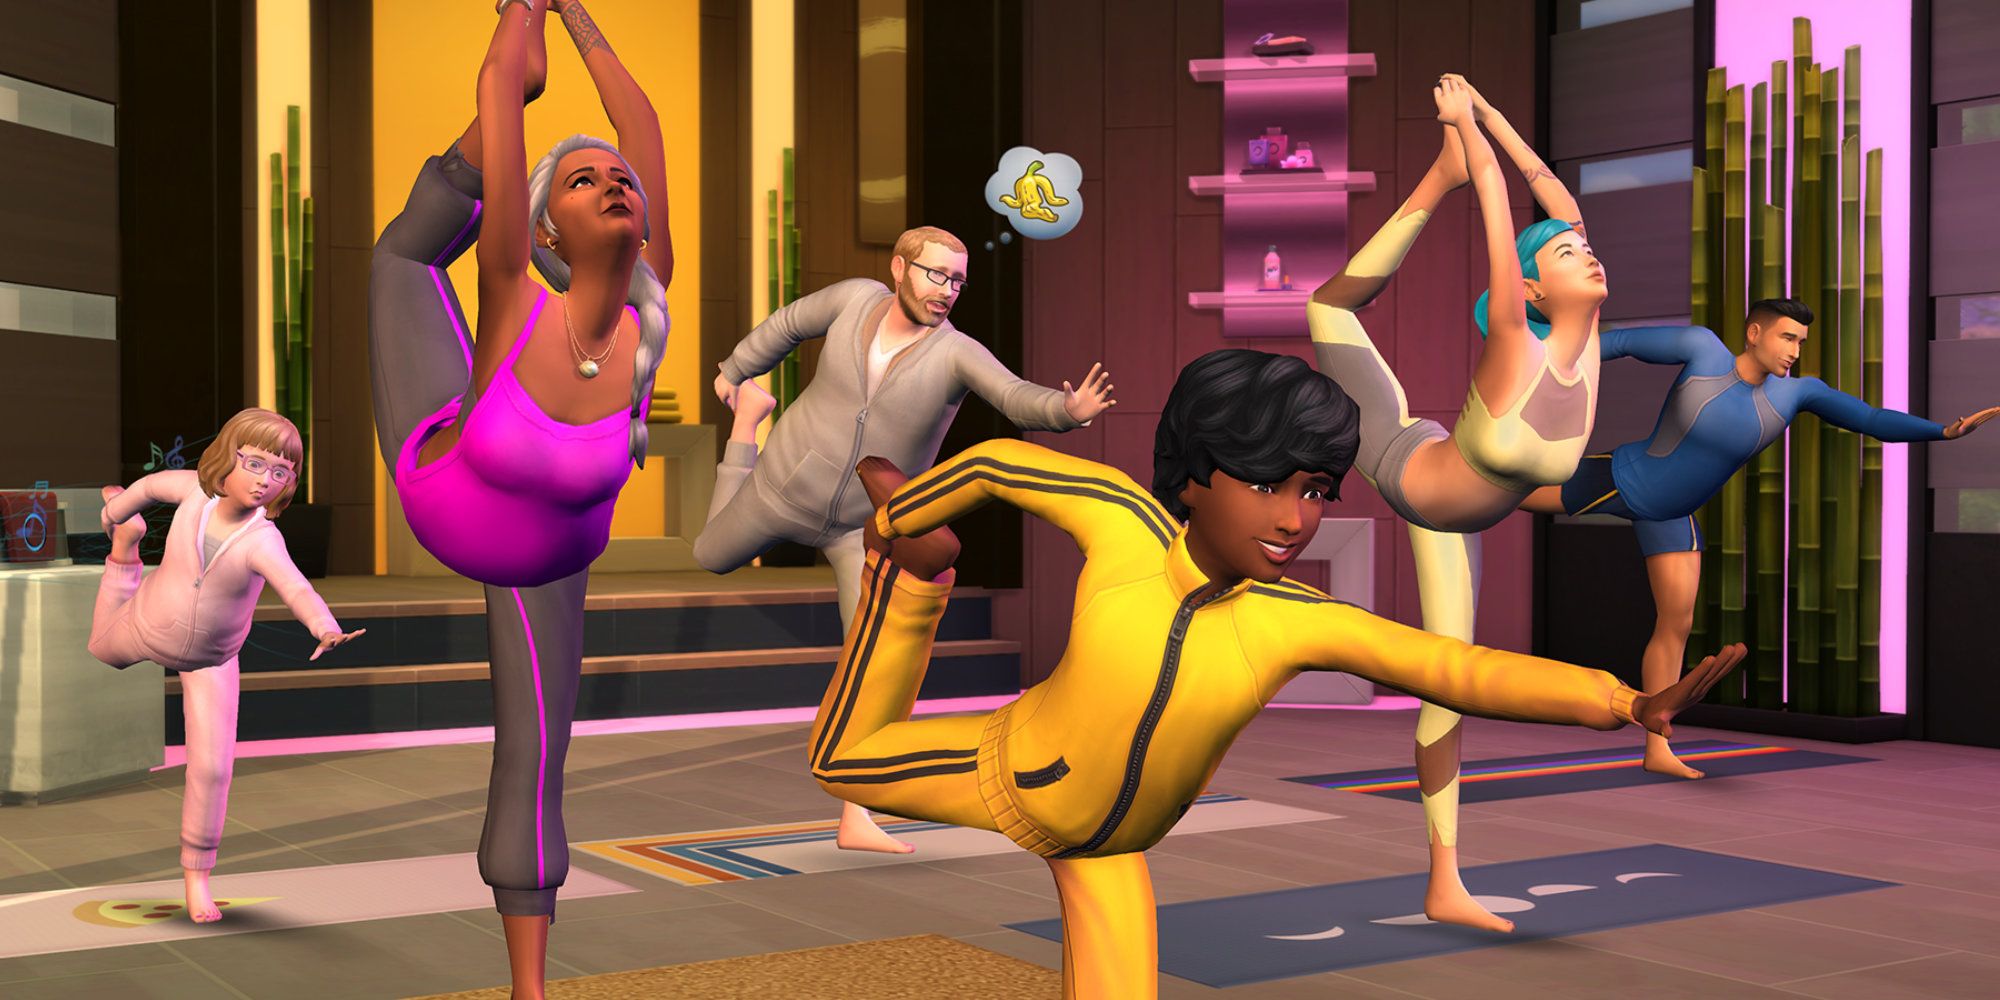 Sims 4 sims doing yoga